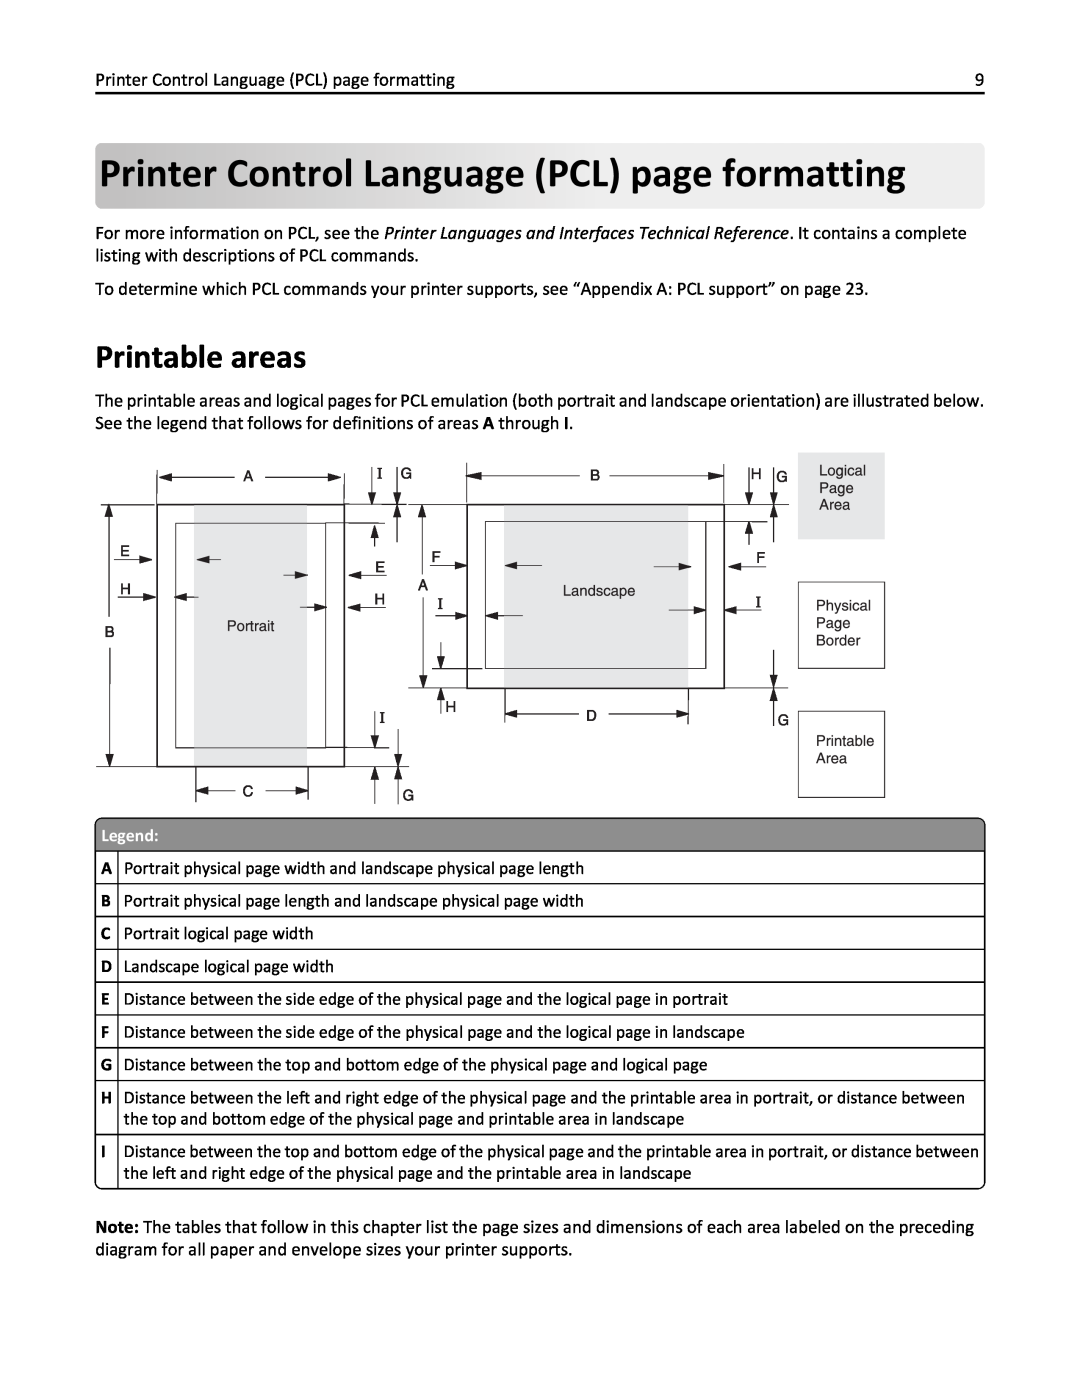 Lexmark 746de, 748dte, 748de, 746dn, 746n, 746dtn, 748e manual Printer Control Language PCL page formatting, Printable areas 